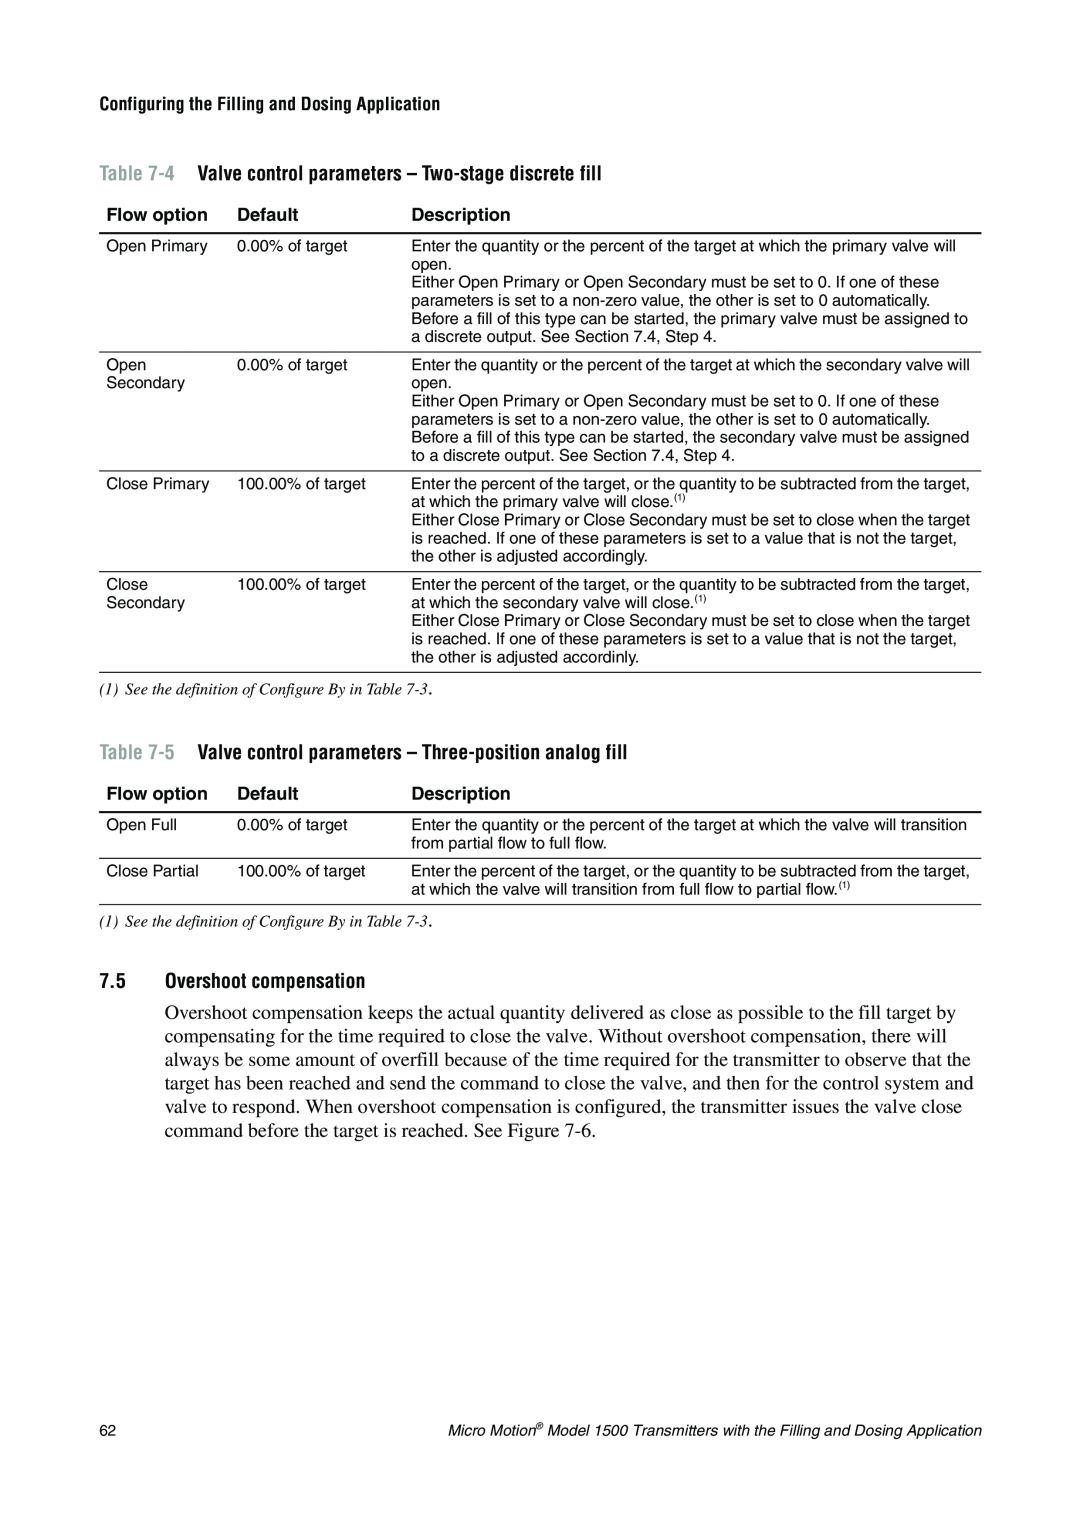 Emerson Process Management 1500 manual 7.5Overshoot compensation 